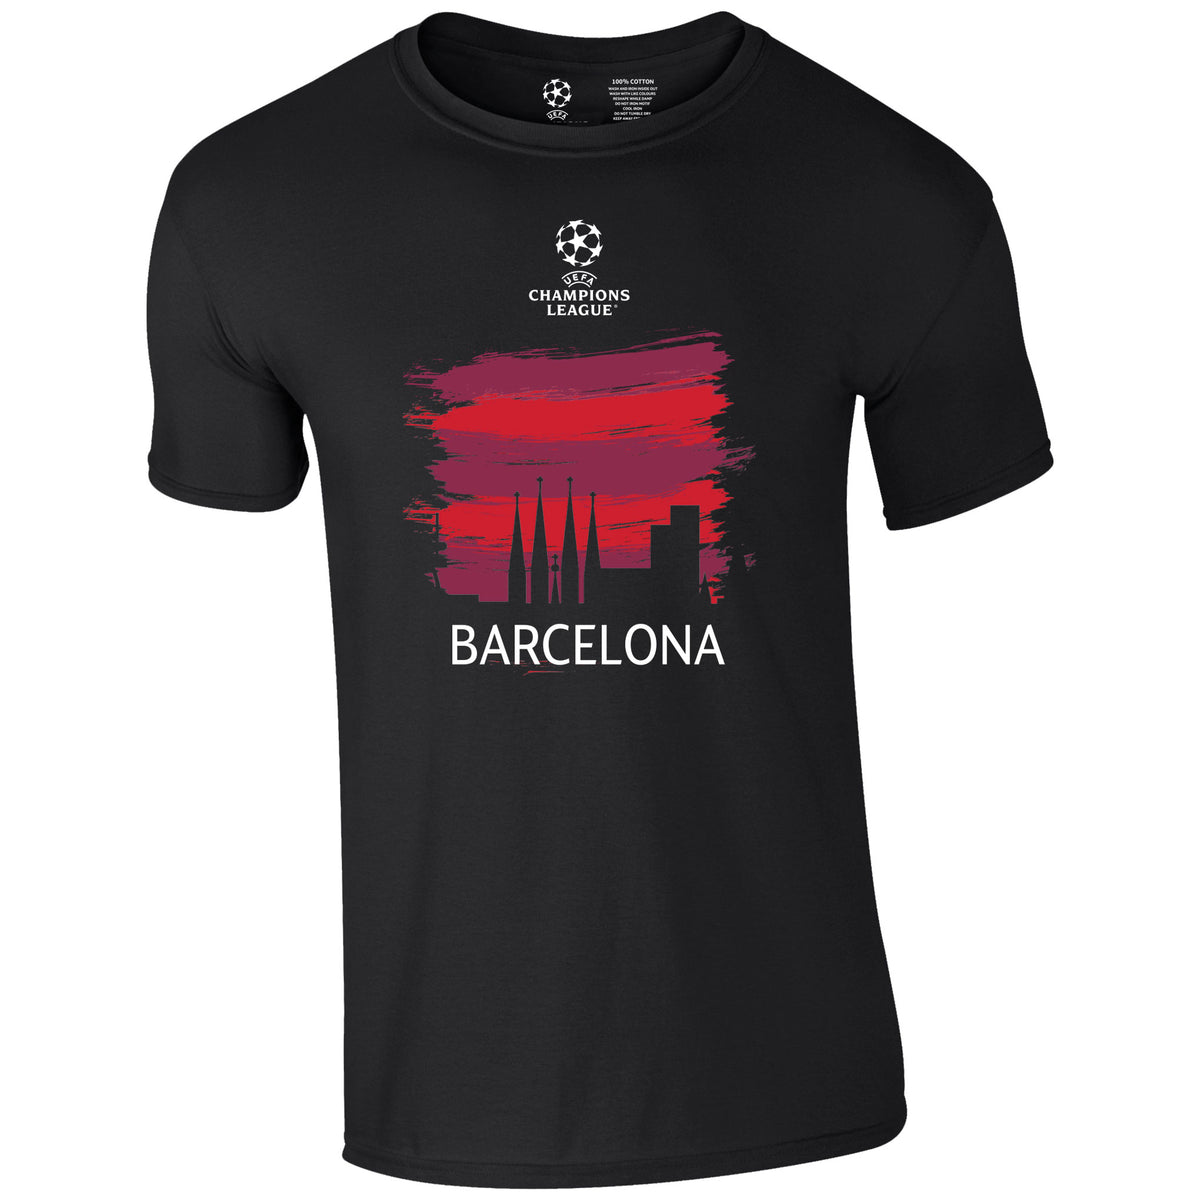 Champions League Barcelona City Painted Skyline T-Shirt Black